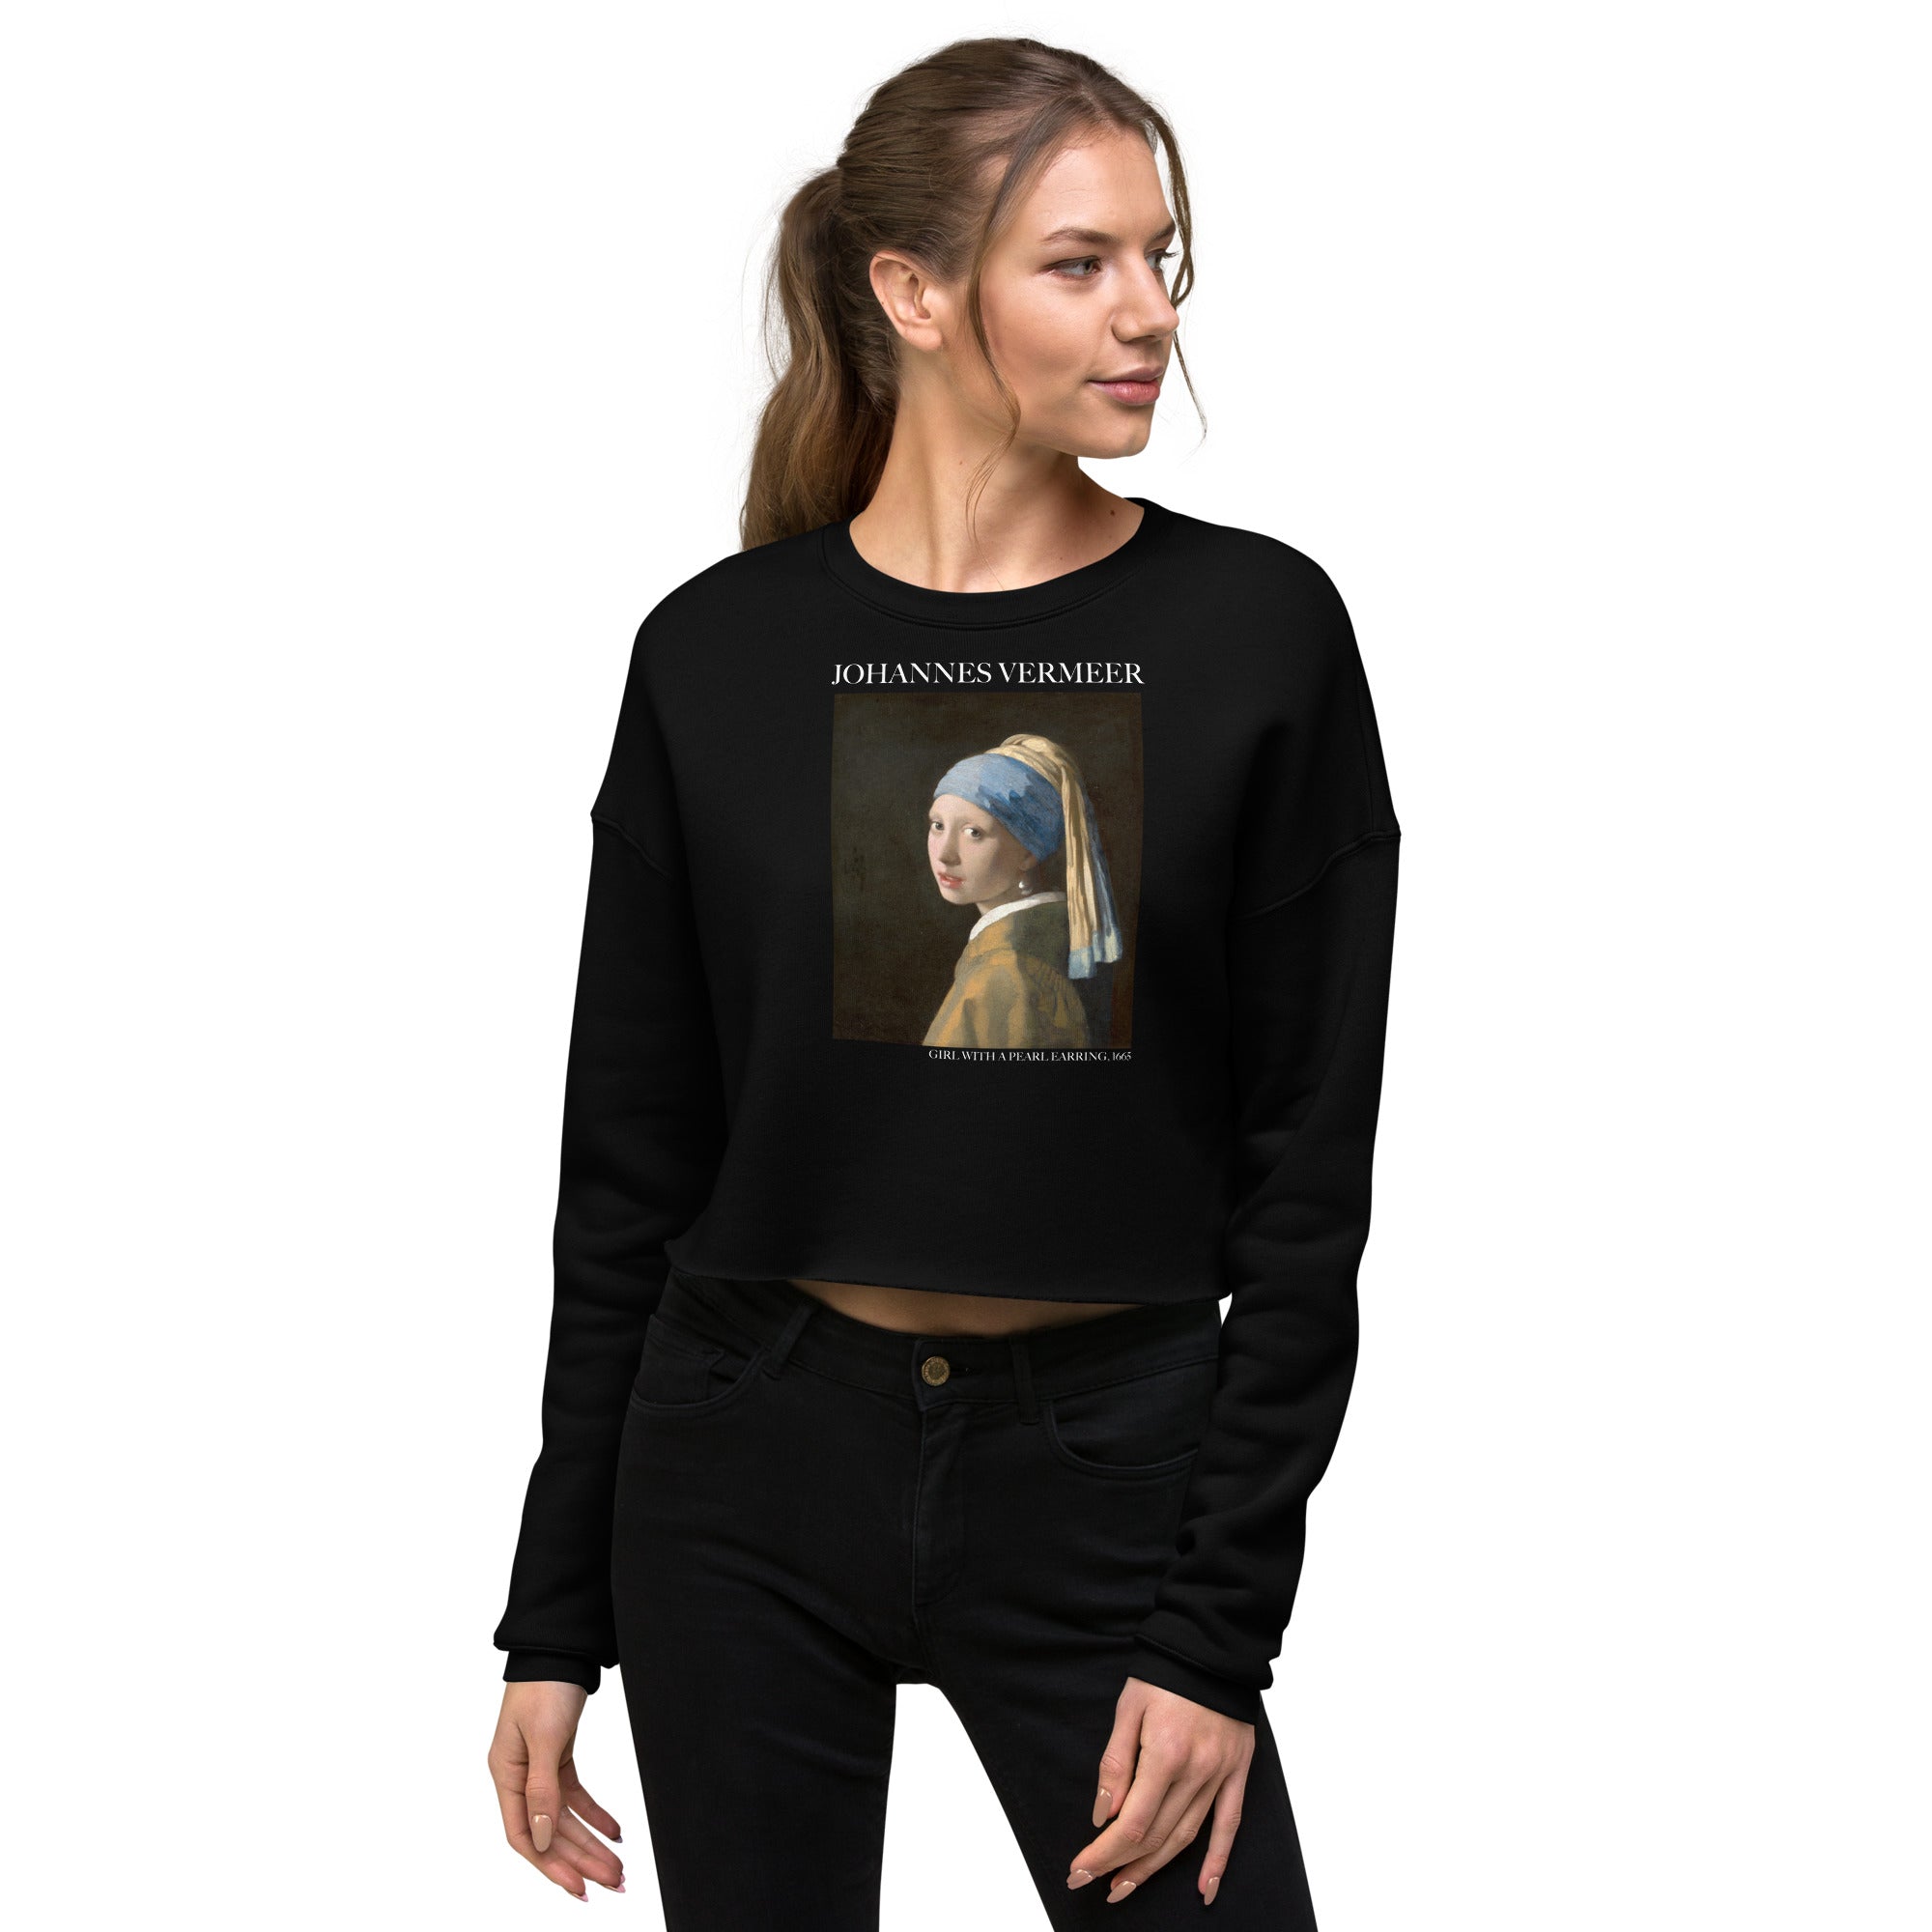 Johannes Vermeer 'Girl with a Pearl Earring' Famous Painting Cropped Sweatshirt | Premium Art Cropped Sweatshirt